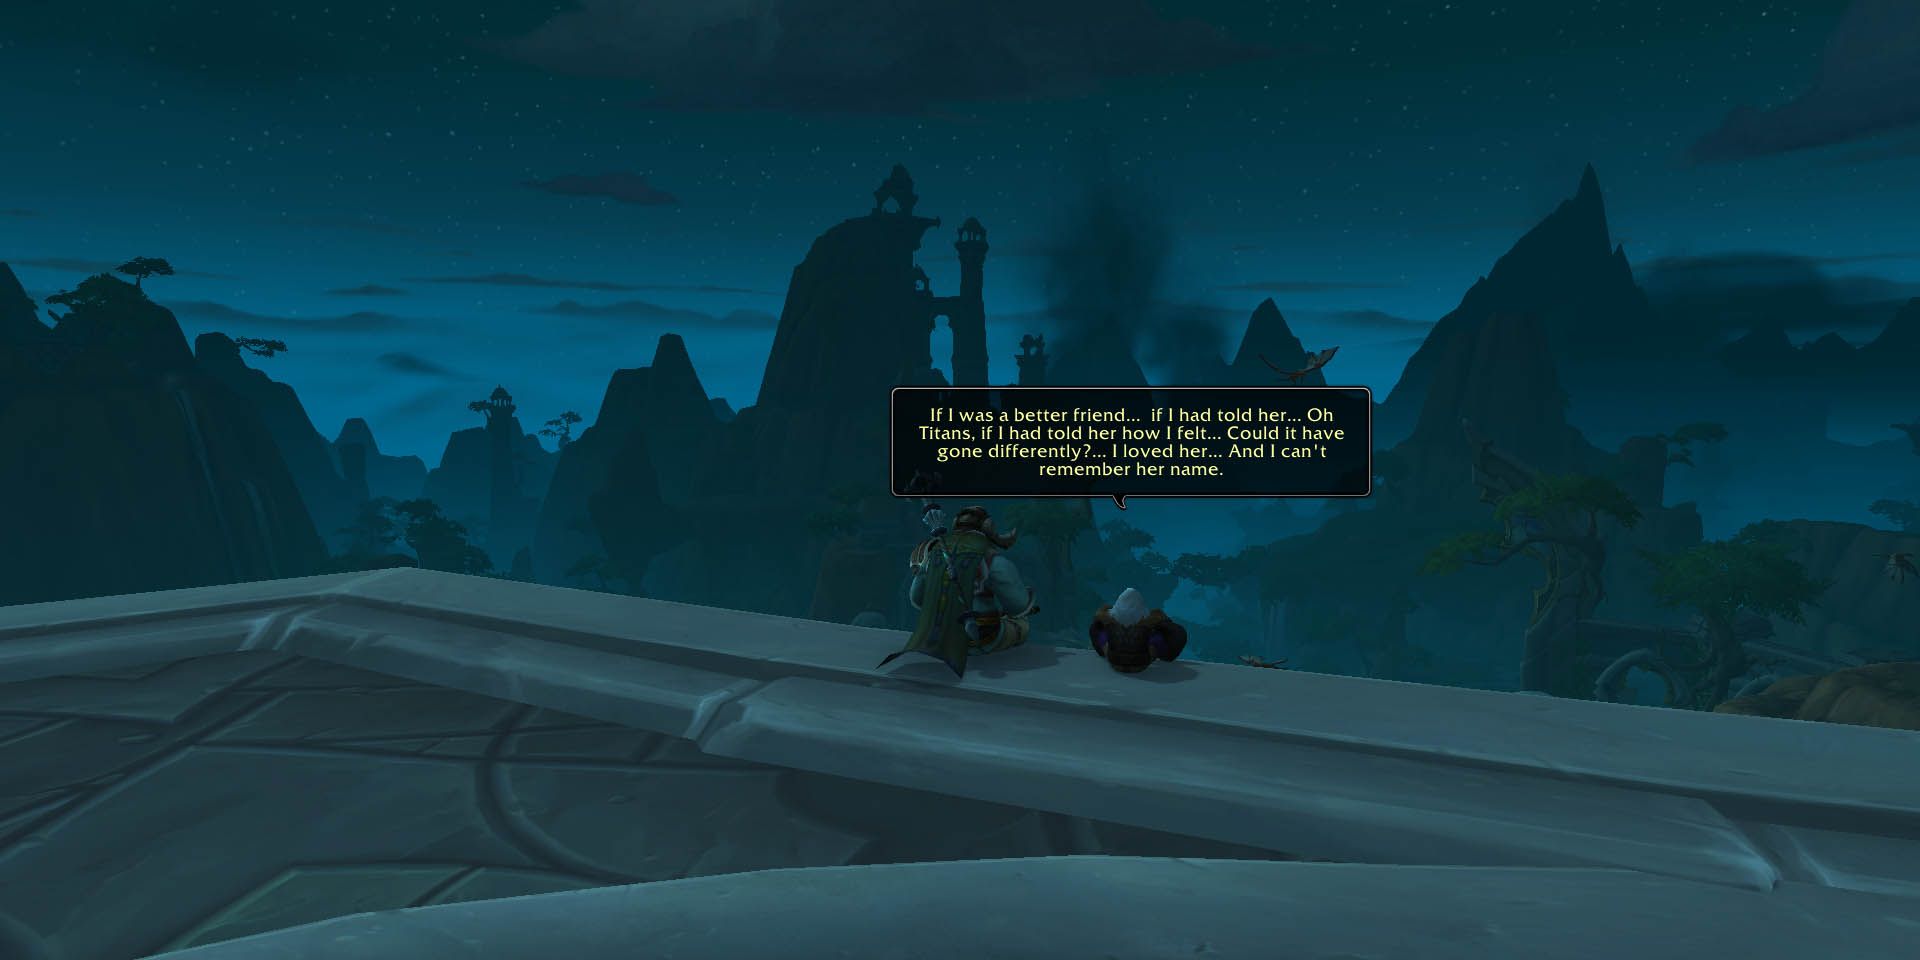 World Of Warcraft: An old dwarf and pandaren sitting on an edge